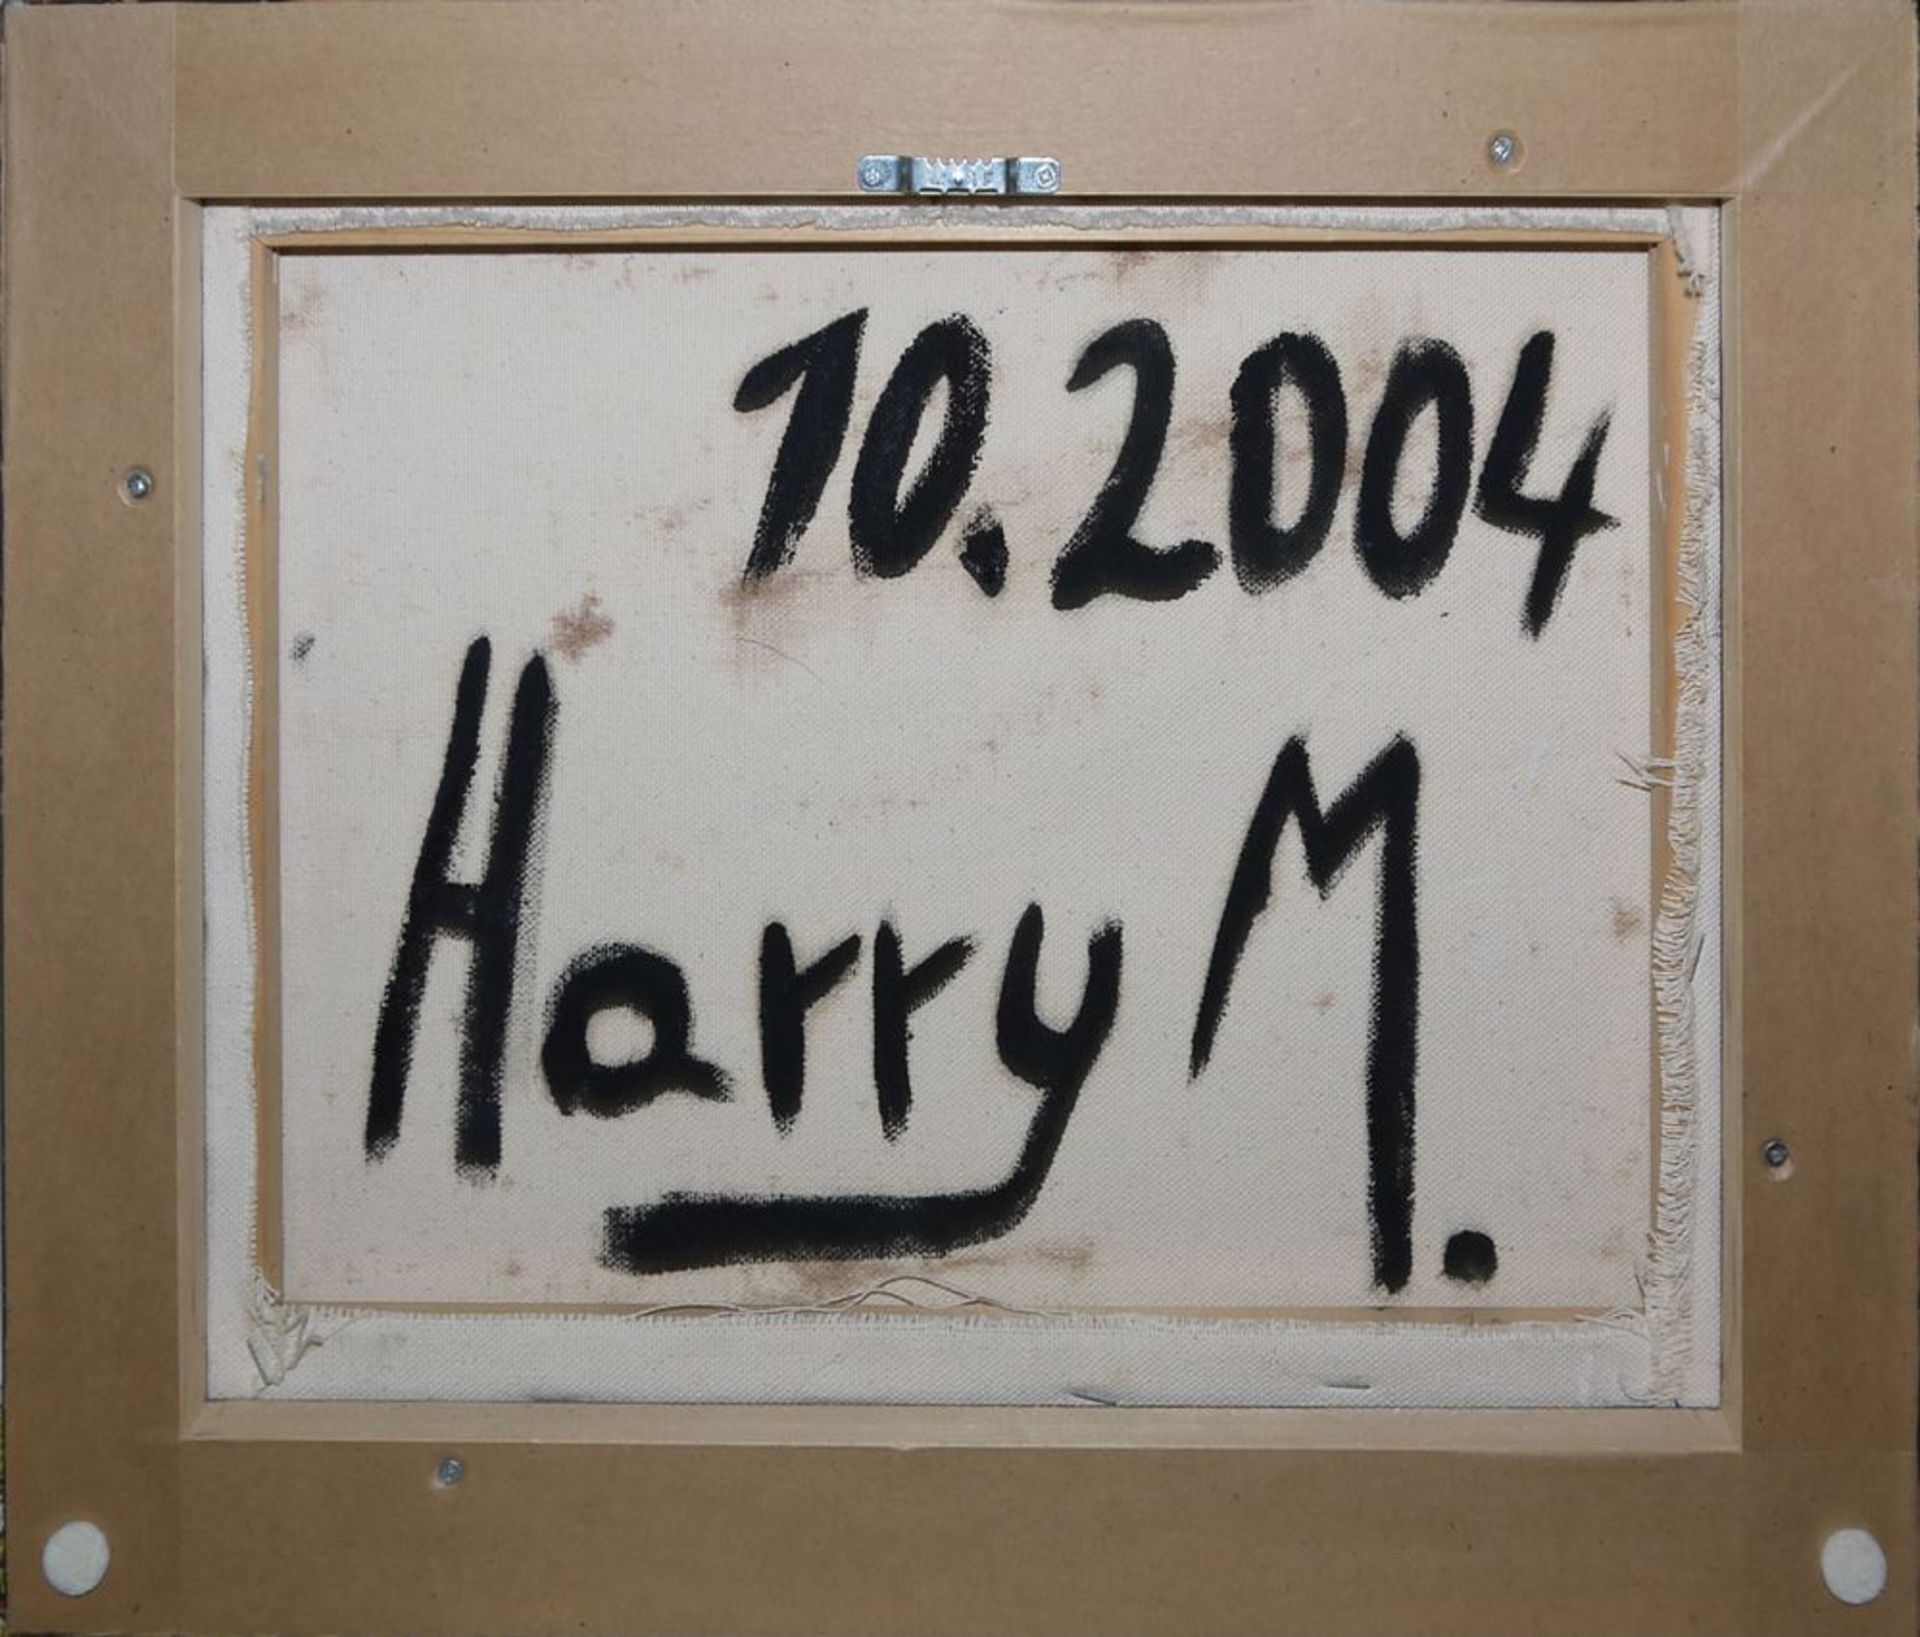 Harry Meyer, Expressive Landscape, signed oil painting from 2004, framed - Image 2 of 2